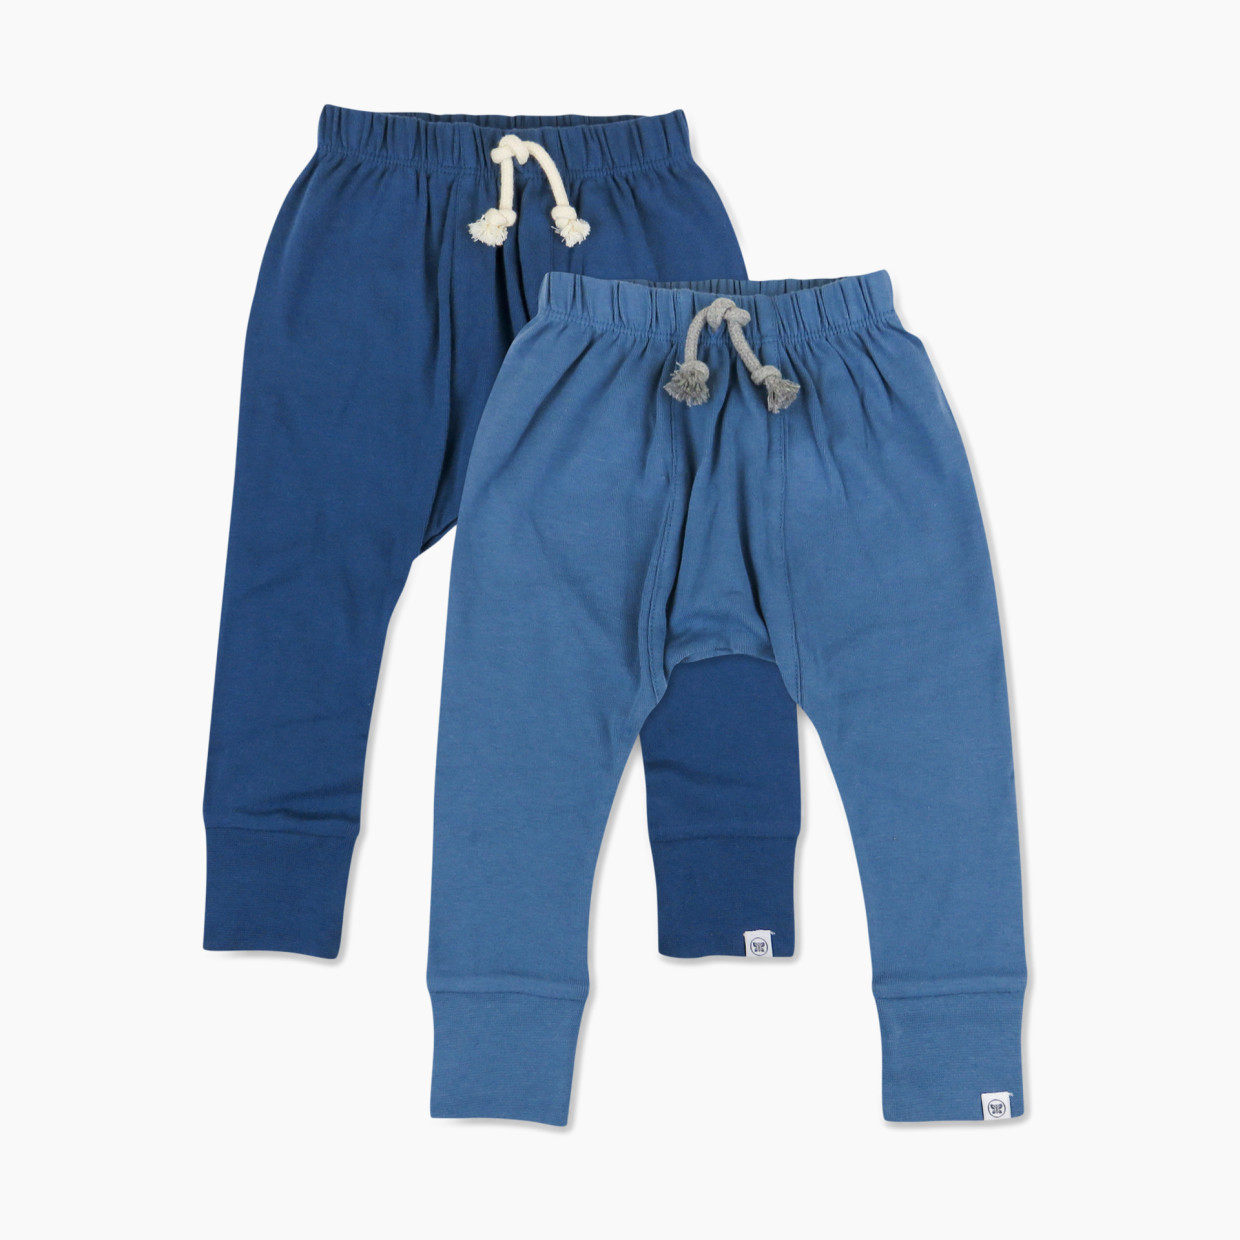 Honest Baby Clothing 2-Pack Organic Cotton Honest Pants - Ombre Blues, 3-6 M.